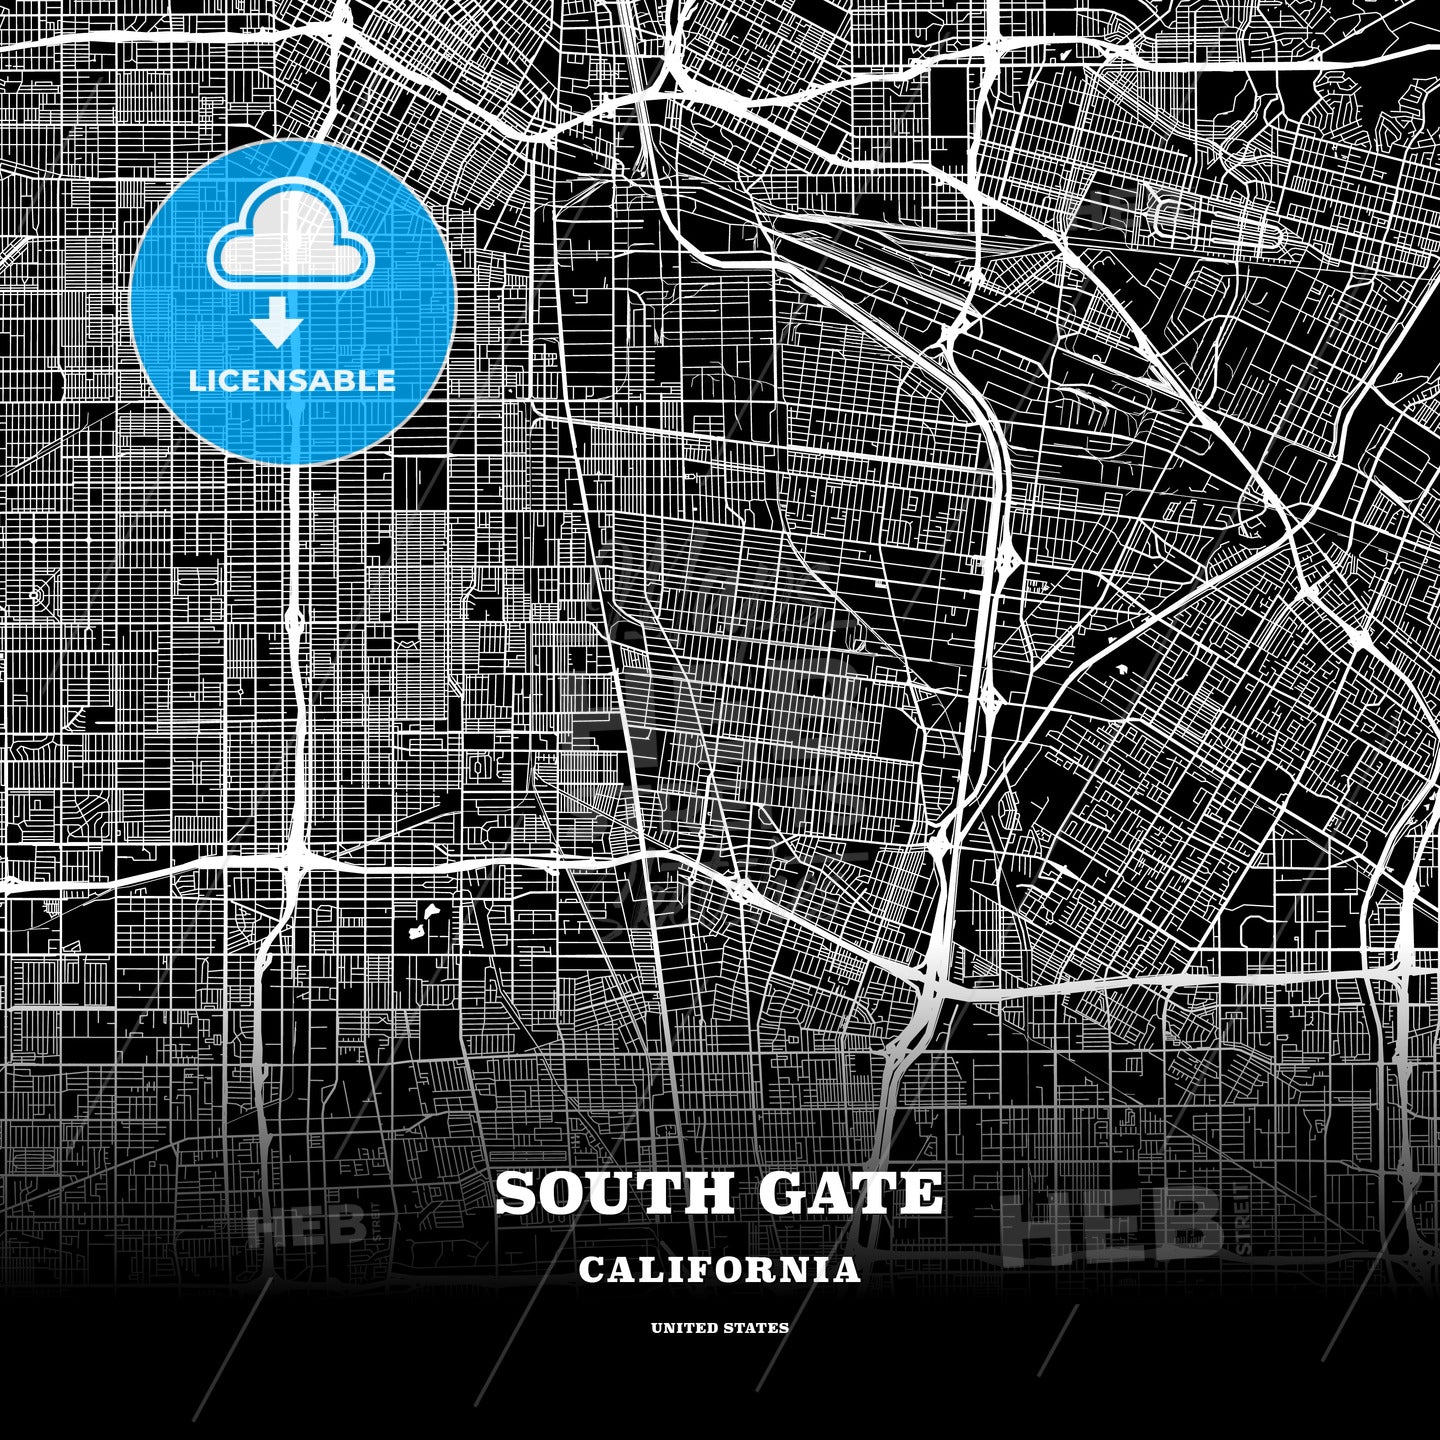 South Gate, California, USA map